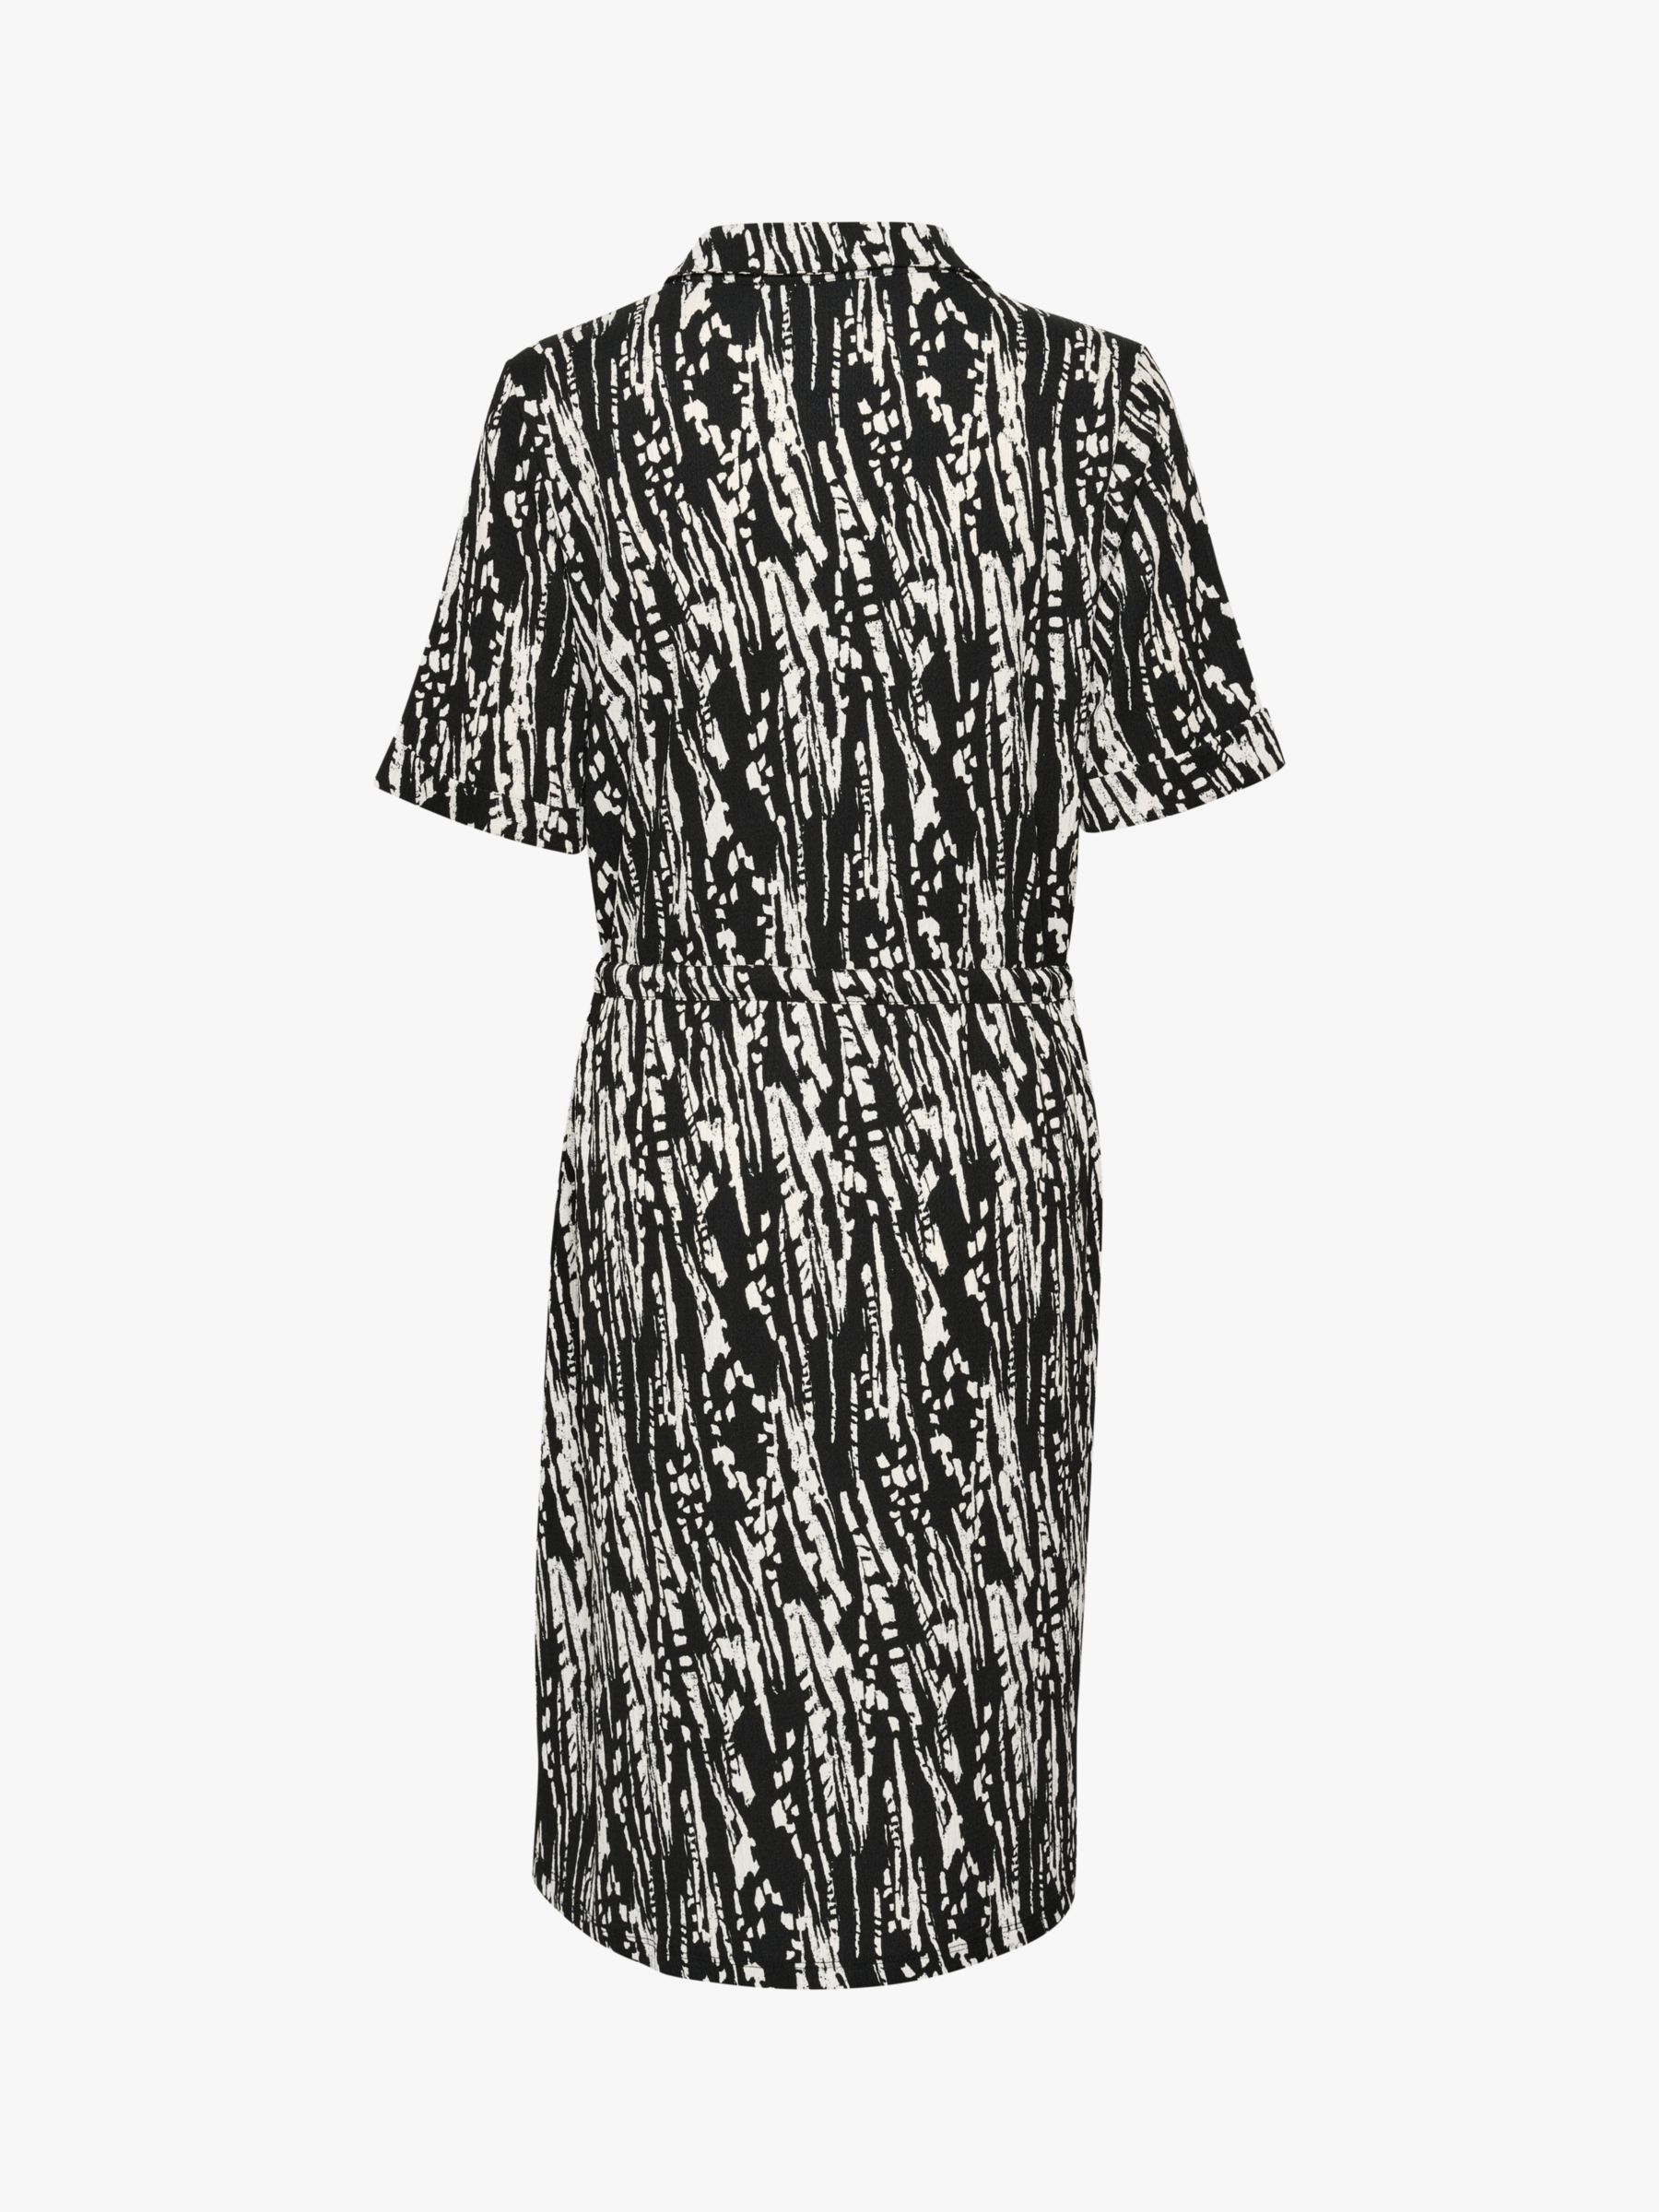 Saint Tropez Valda Bamboo Lines Shirt Dress, Black/White, XS